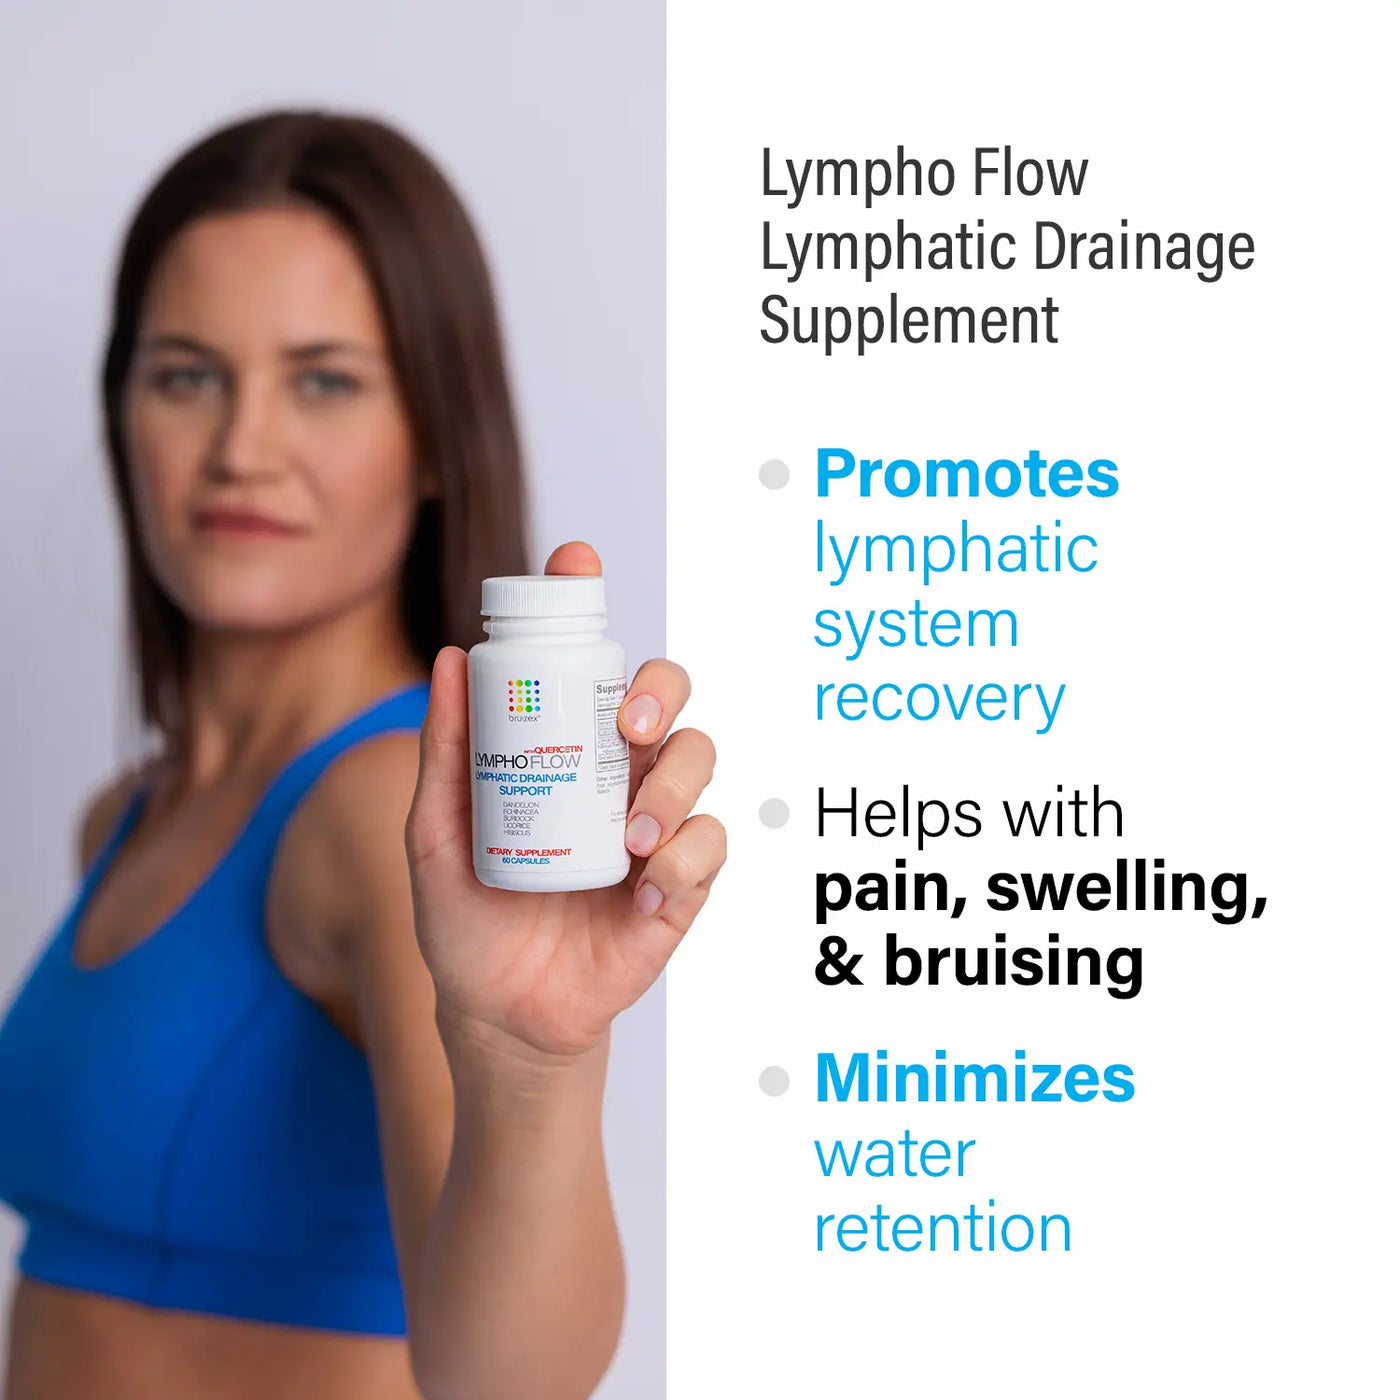 Lympho Flow Lymphatic Drainage Supplement